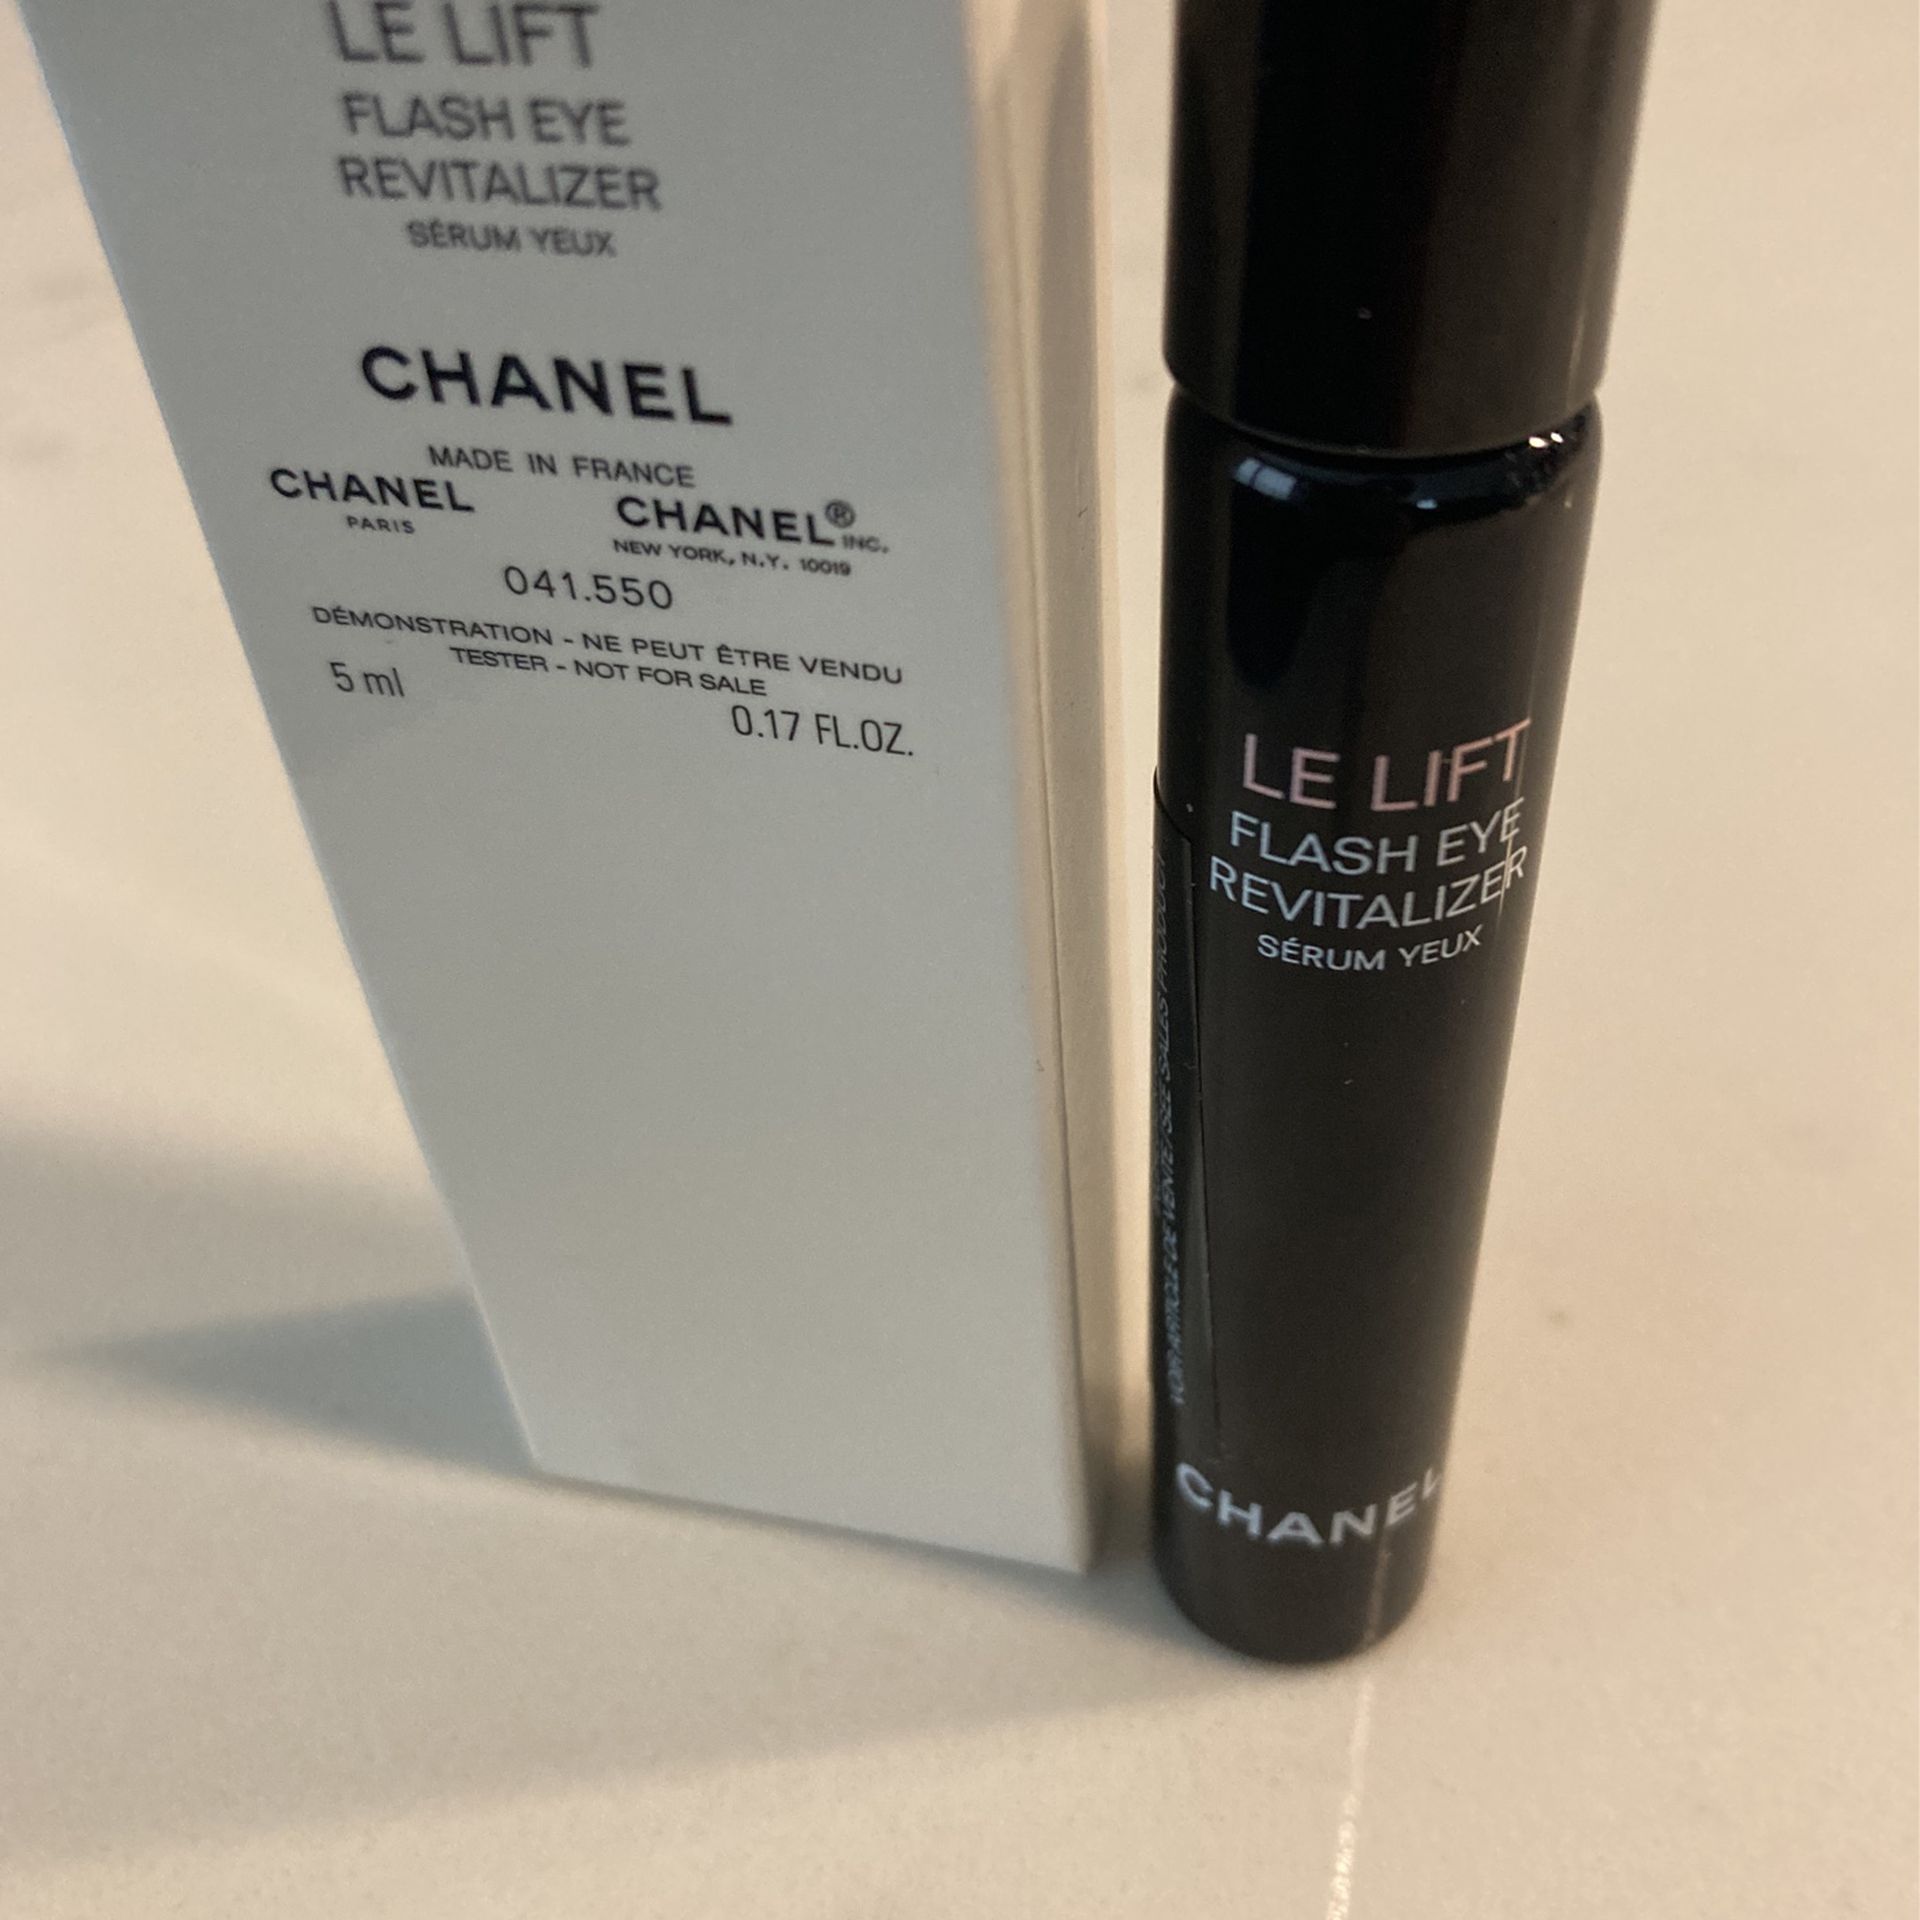 CHANEL Le Lift Firming- Anti-Wrinkle Flash Eye Revitalizer